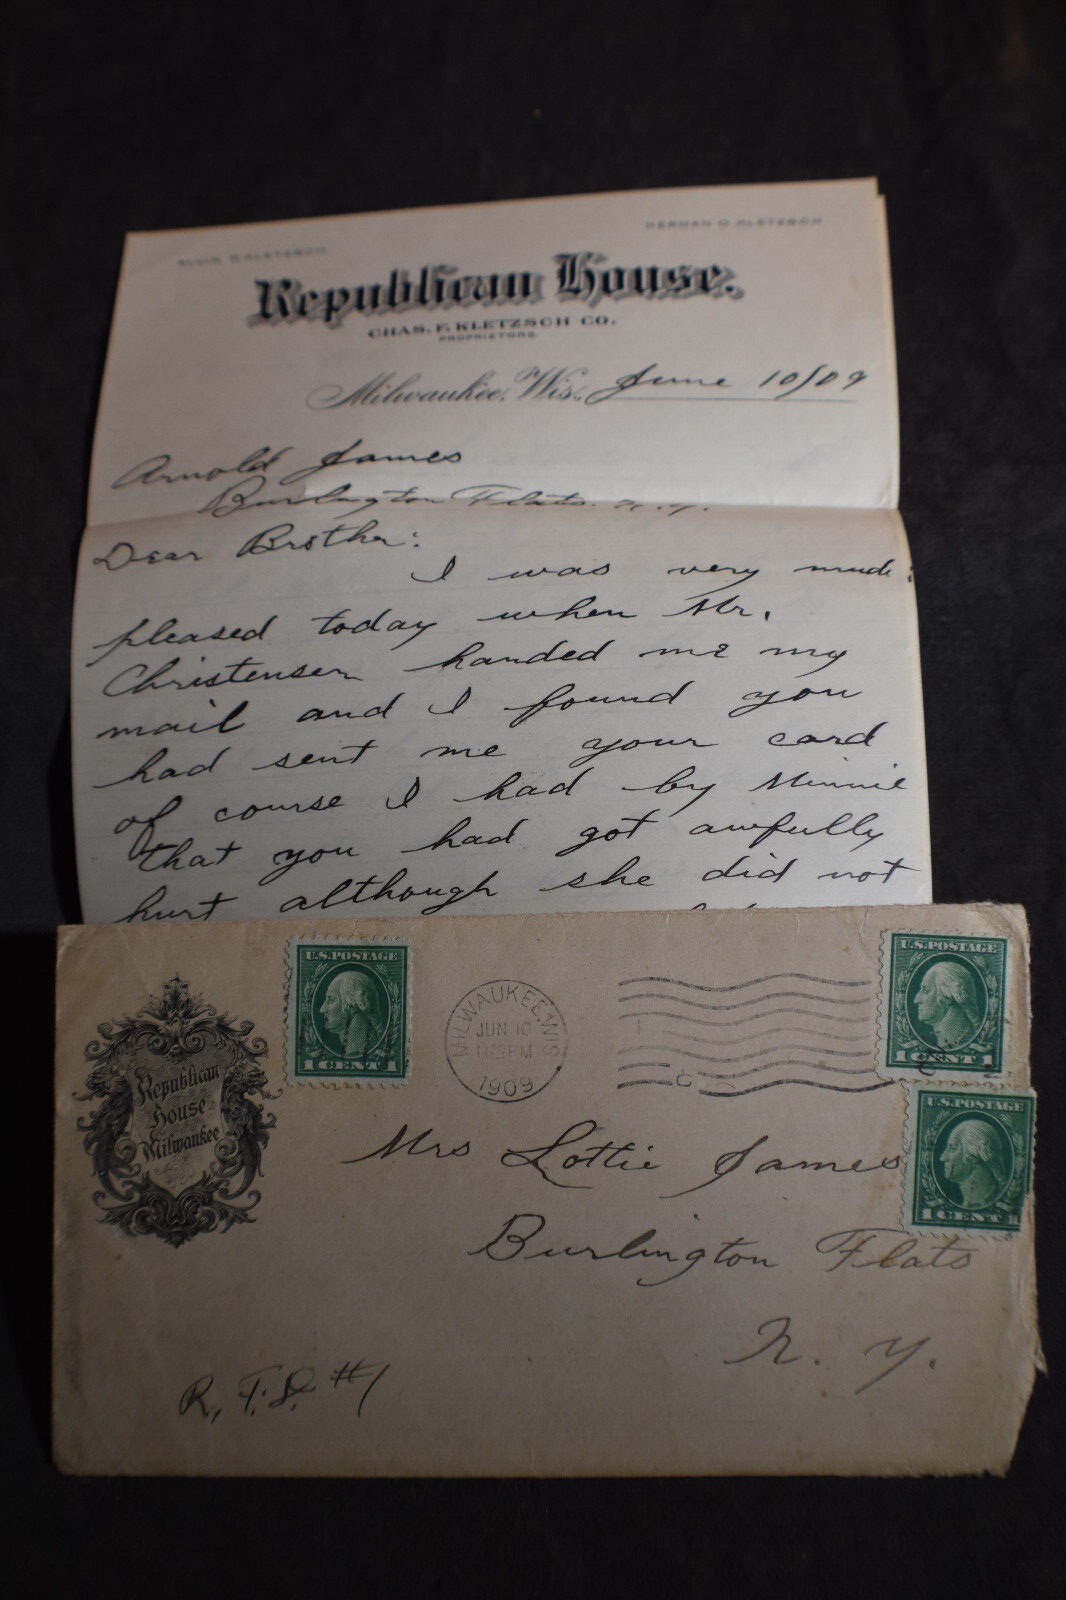 1909 The Republican House, Milwaukee, Wis. Envelope & Letterhead